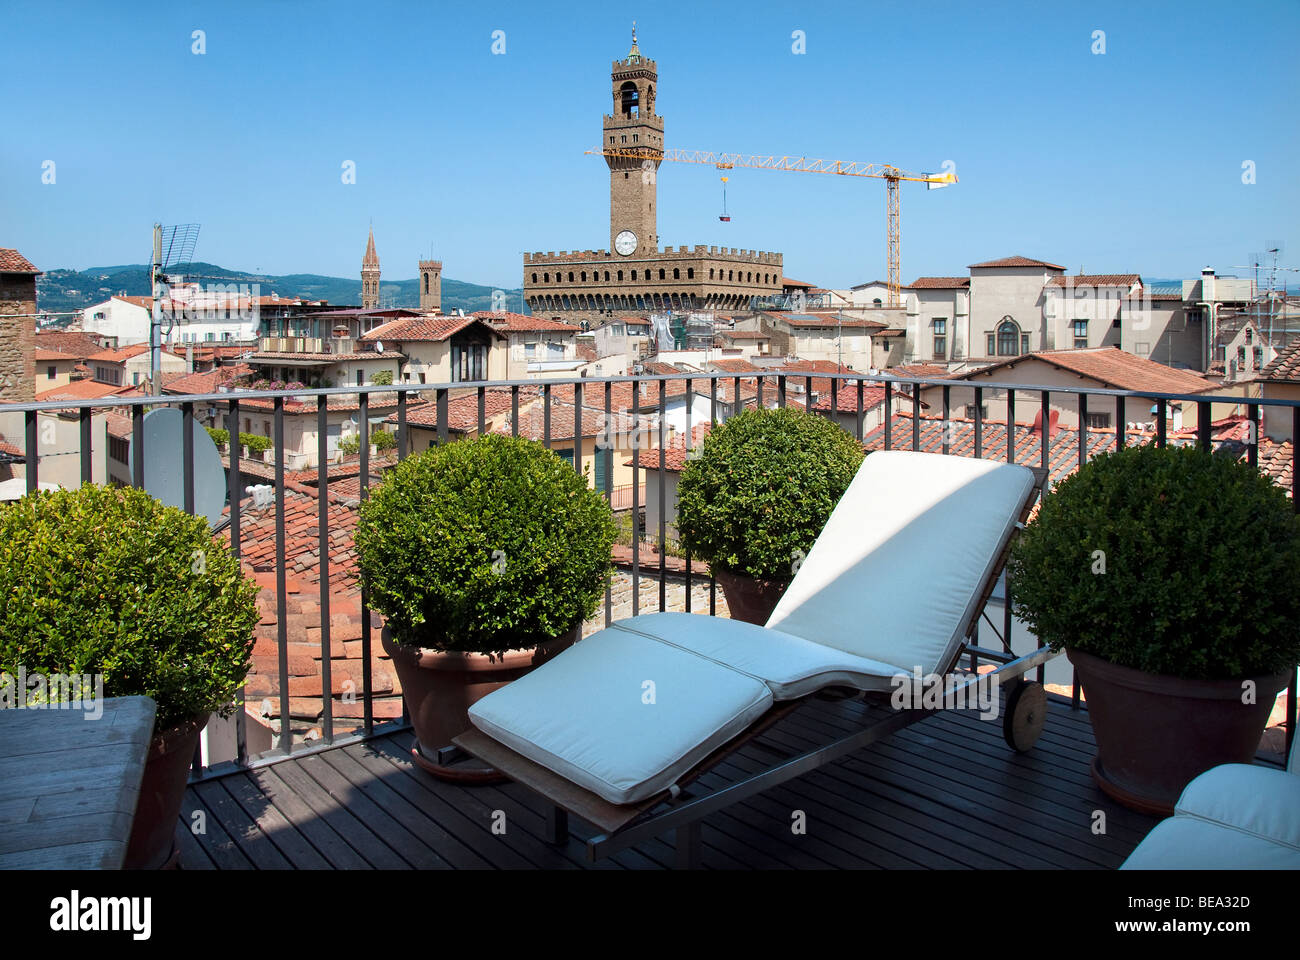 Sonne-Liegestuhl auf dem Balkon die Penthouse-Suite des Hotel Continentale mit Blick auf den Palazzo Vecchio in Florenz Stockfoto